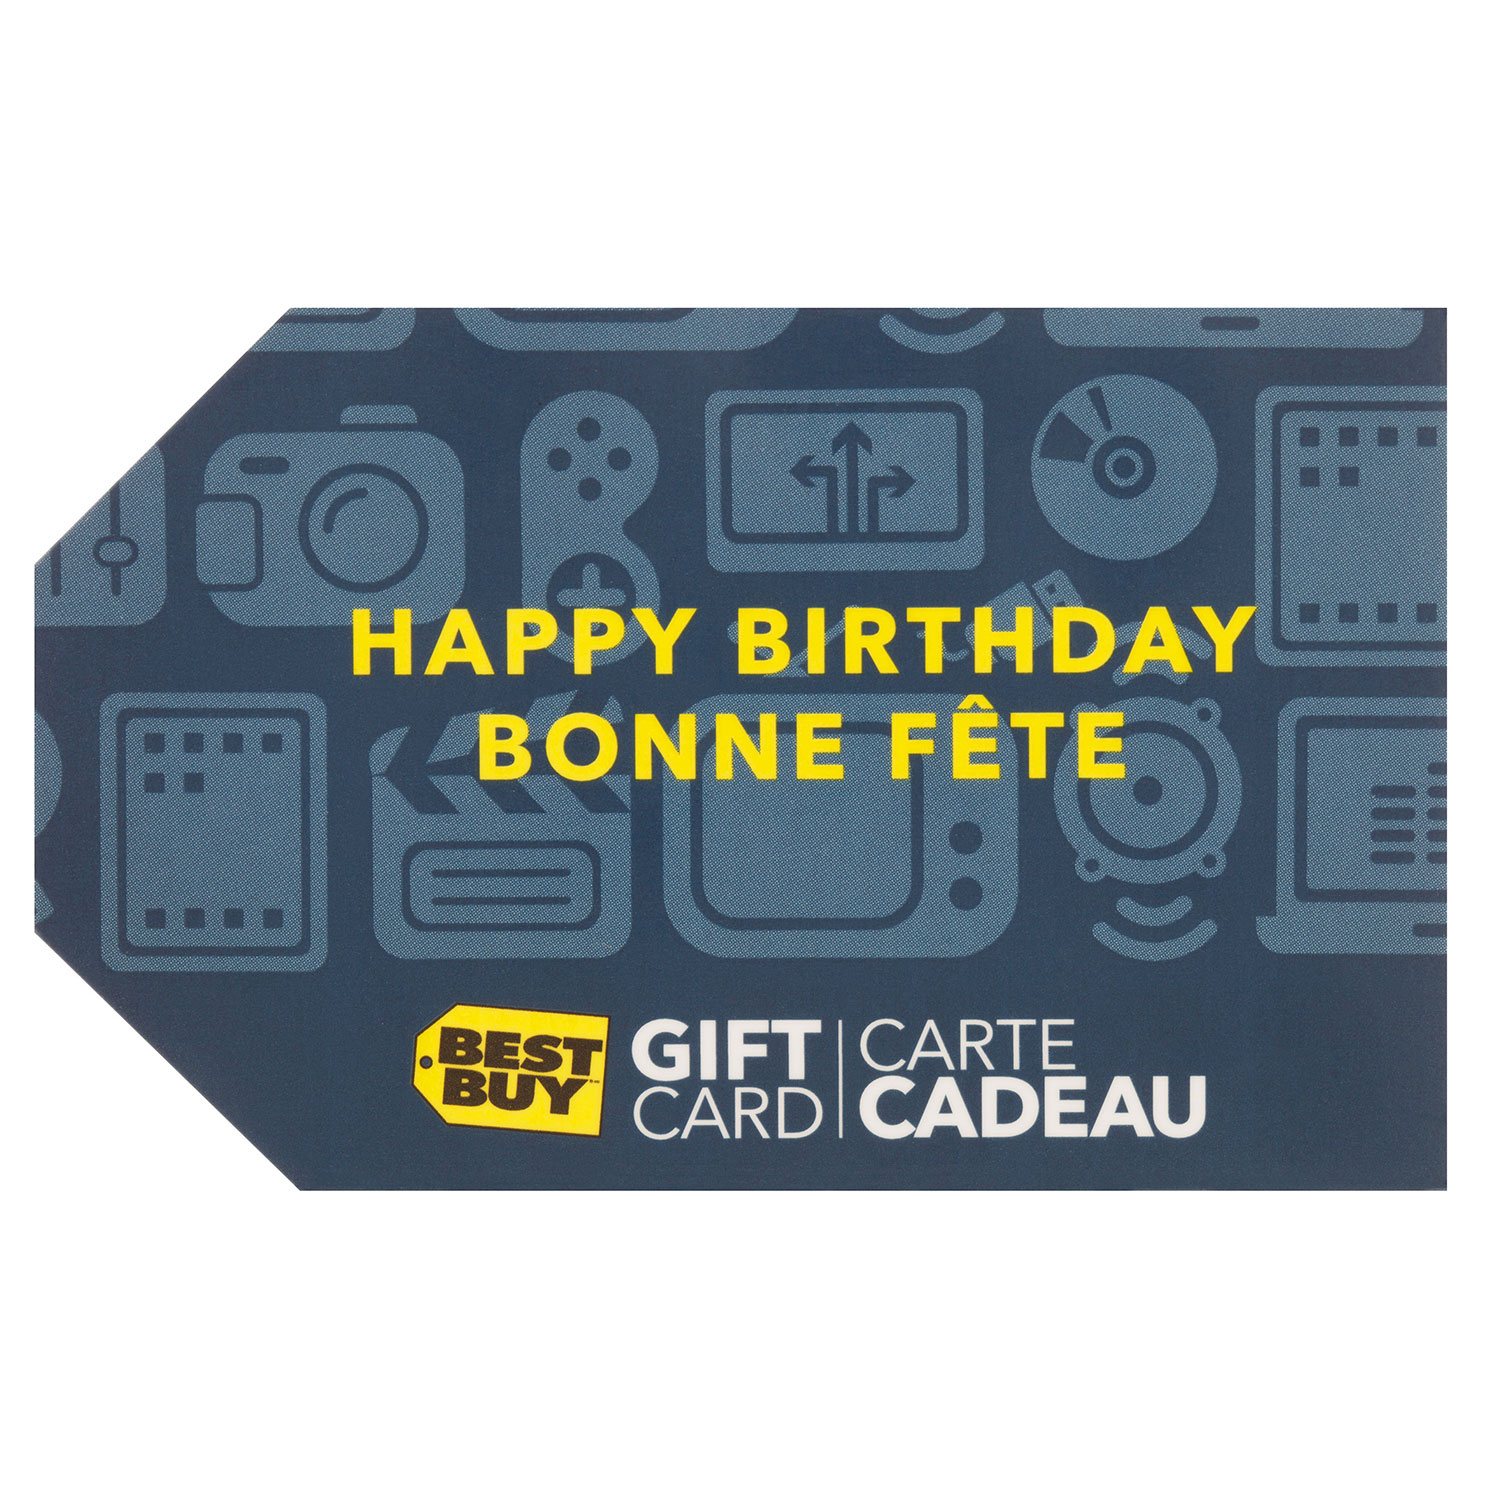 Best Buy Birthday Gift Card - $150